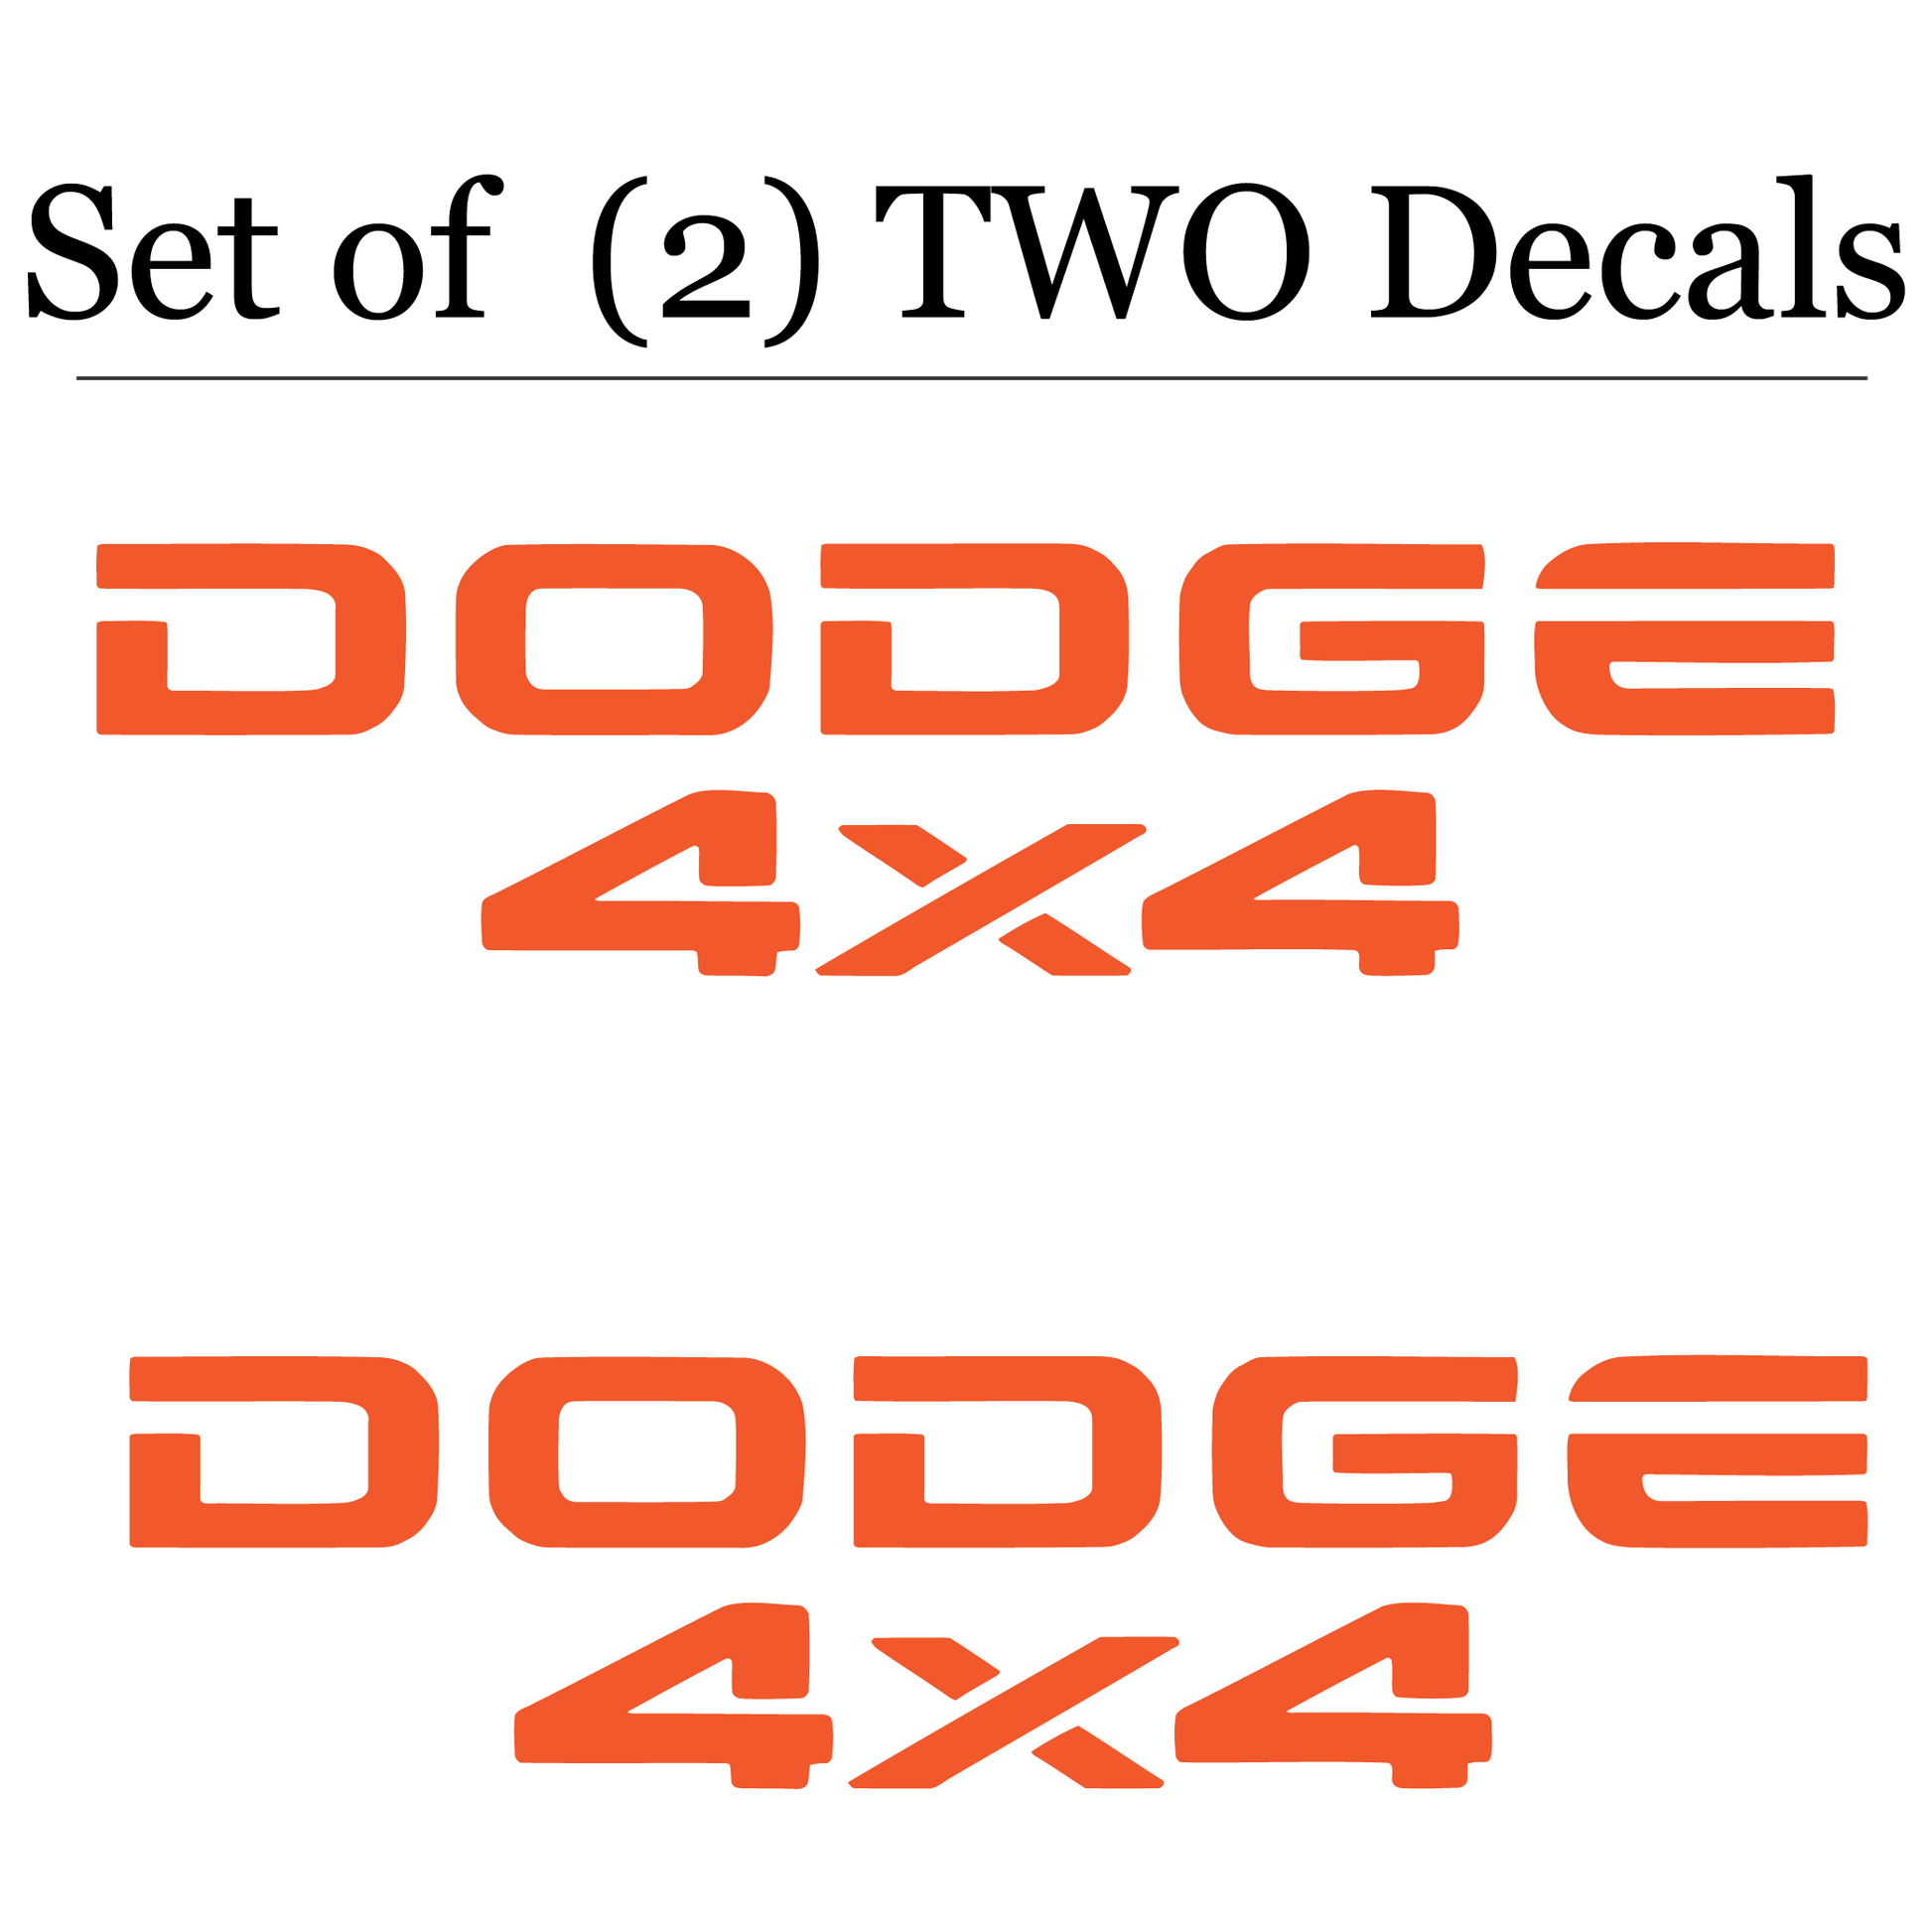 Shop Vinyl Design RAM Trucks Replacement Tailgate Decals #12 Vehicle 001 Orange Gloss Shop Vinyl Design decals stickers